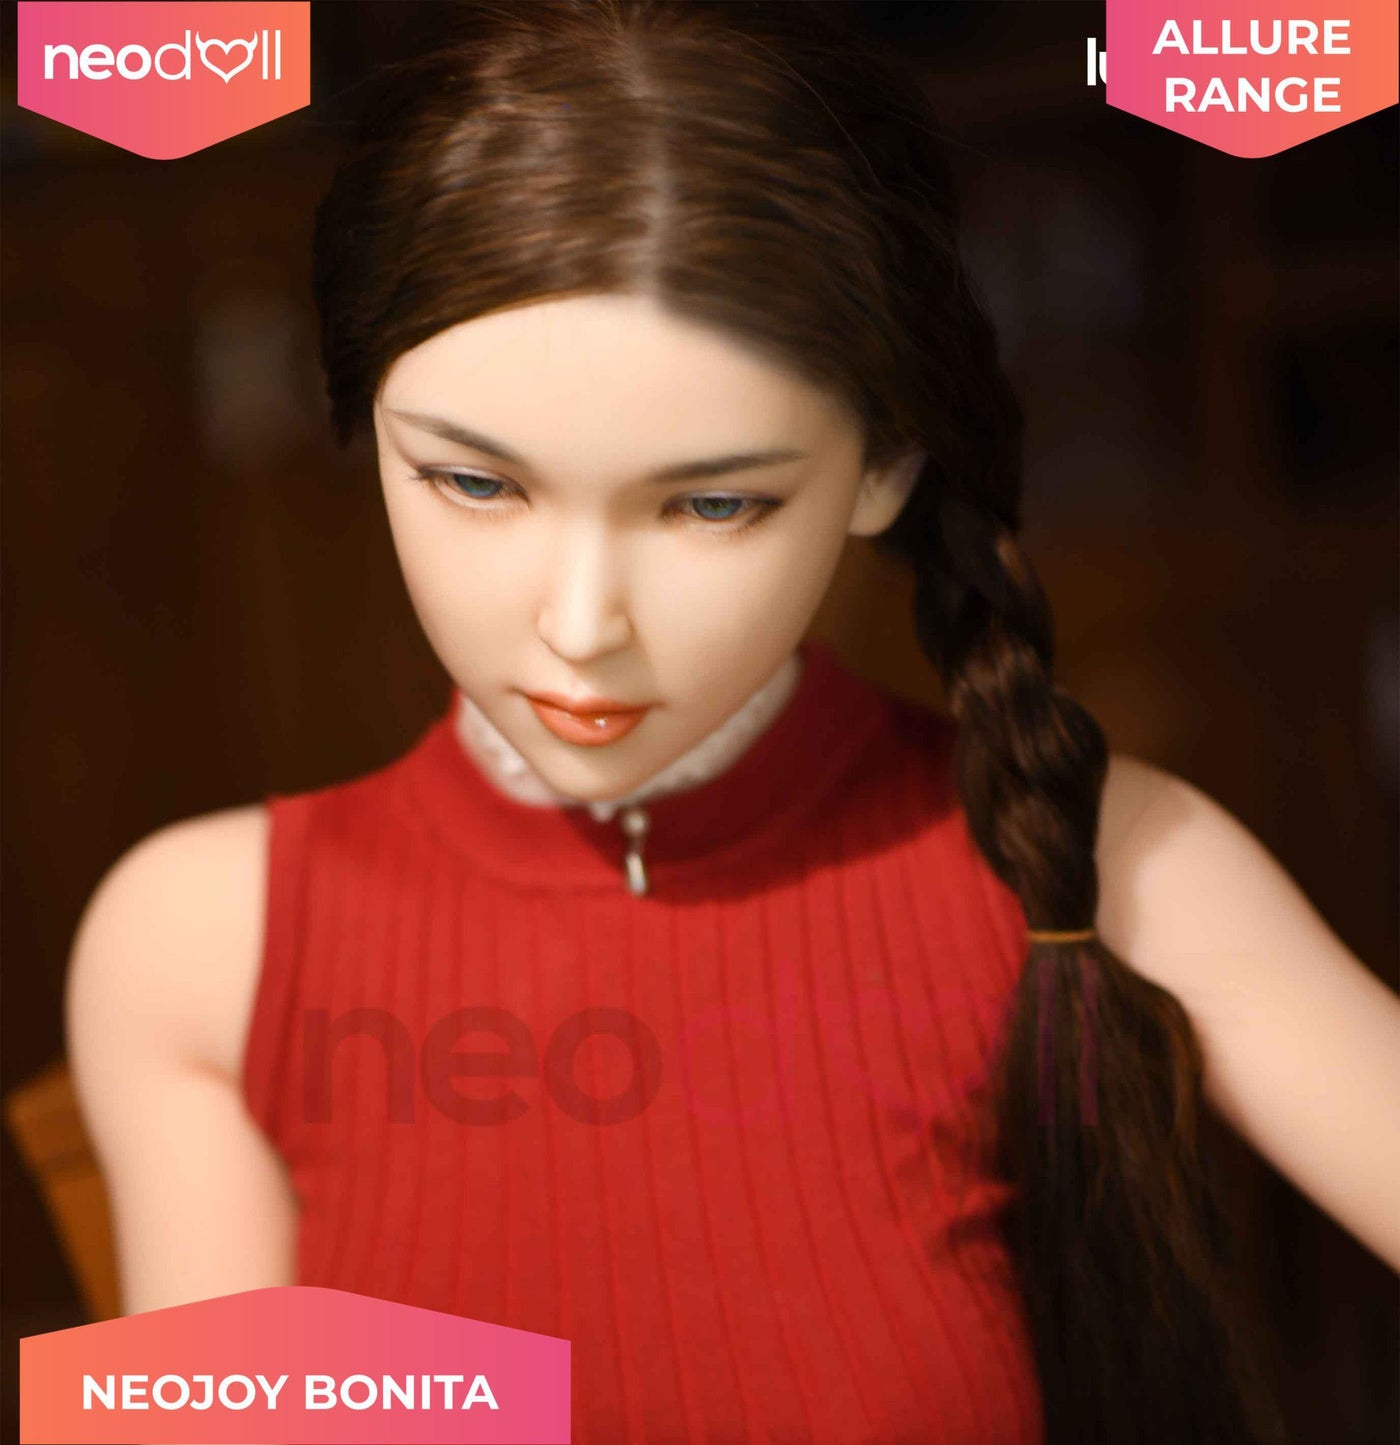 Neodoll Allure Bonita - Realistic Sex Doll - 171cm - Natural